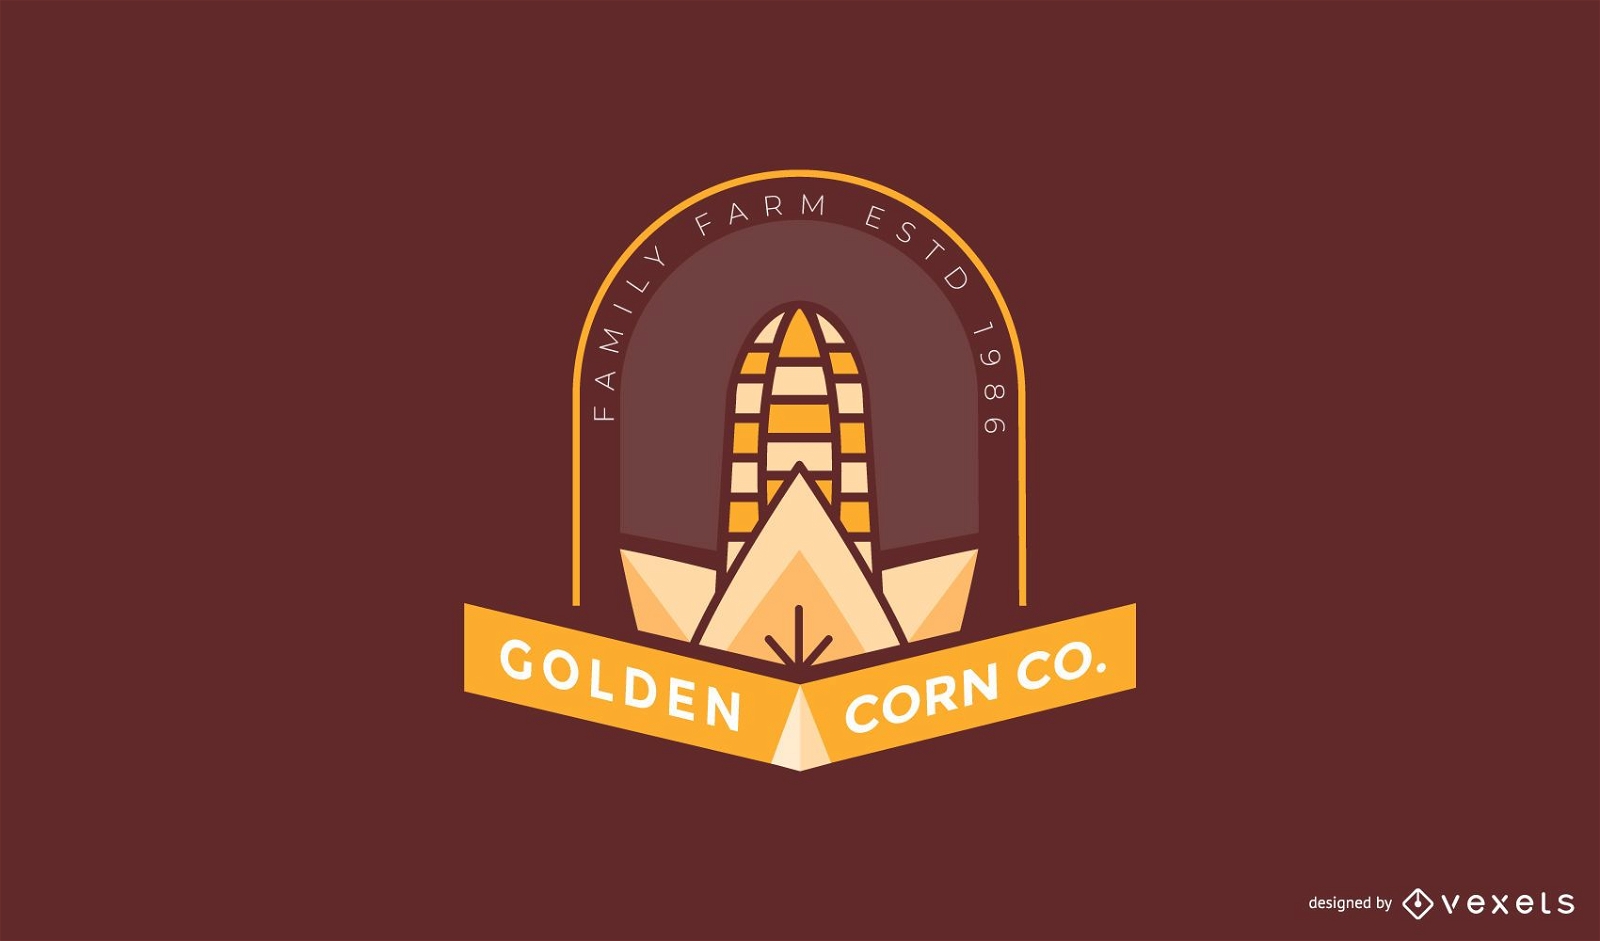 Golden corn farm logo template